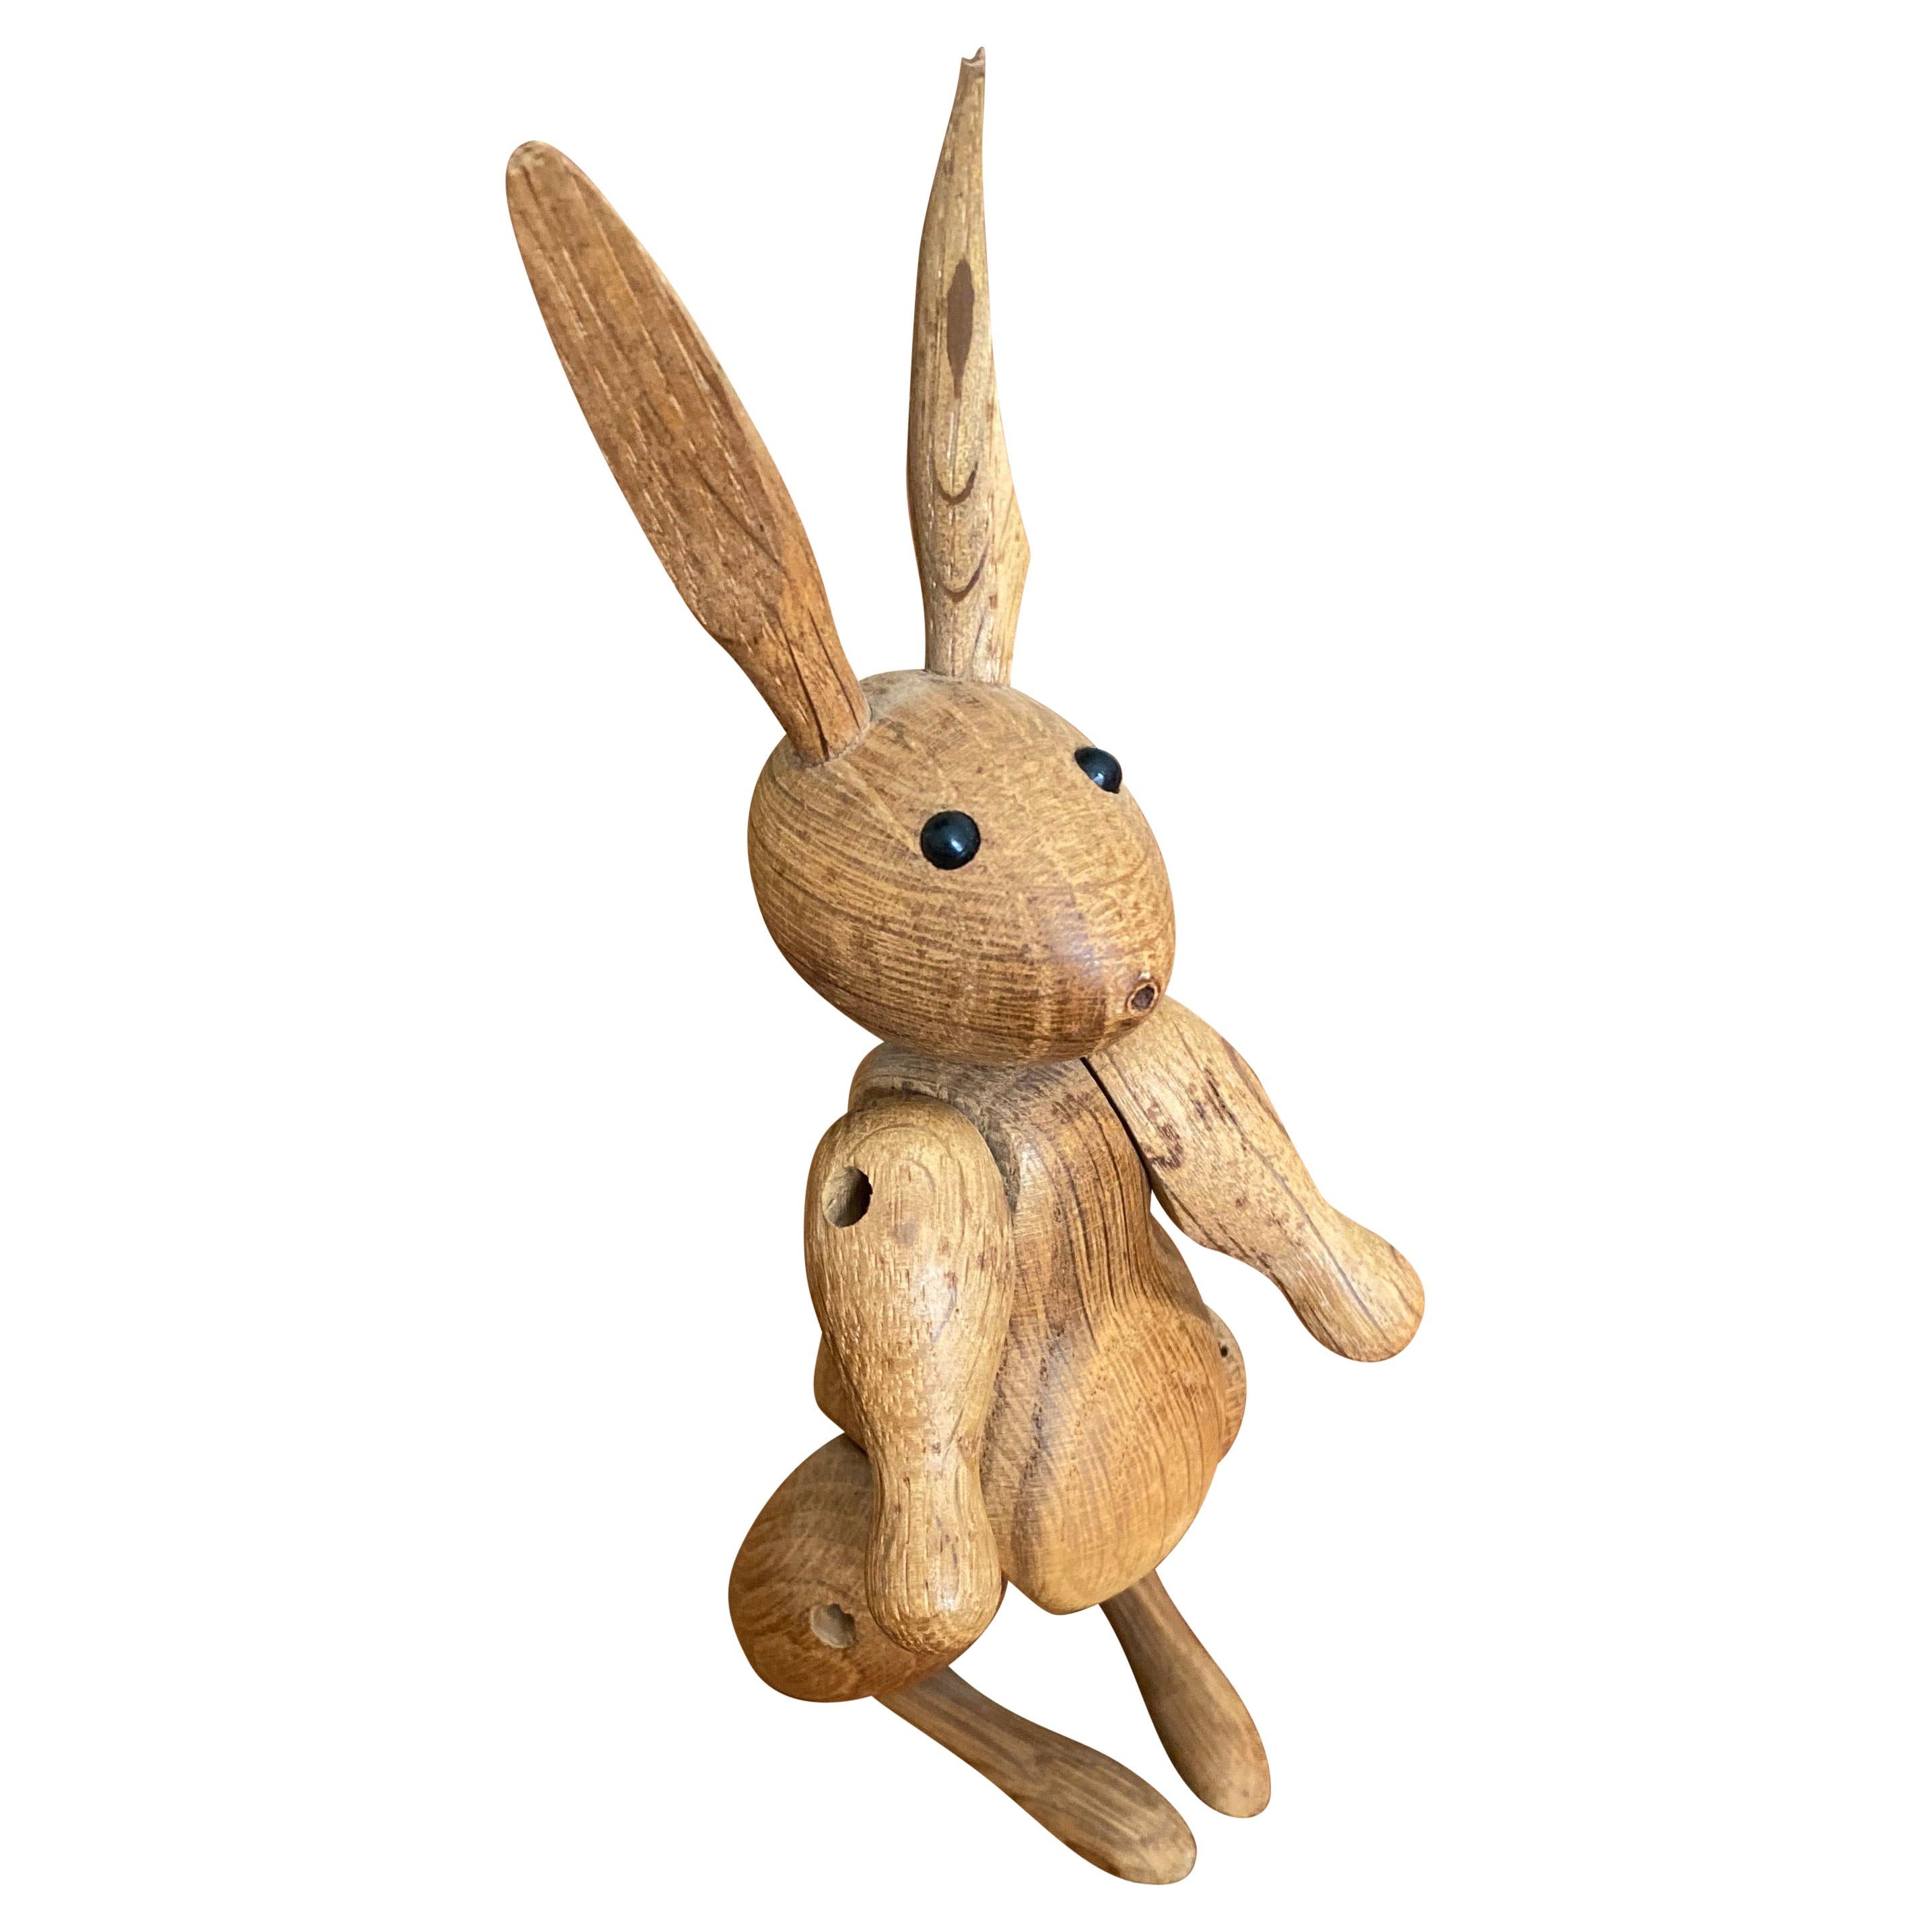 Articulated Mid-Century Danish Wooden Rabbit by Kay Bojesen